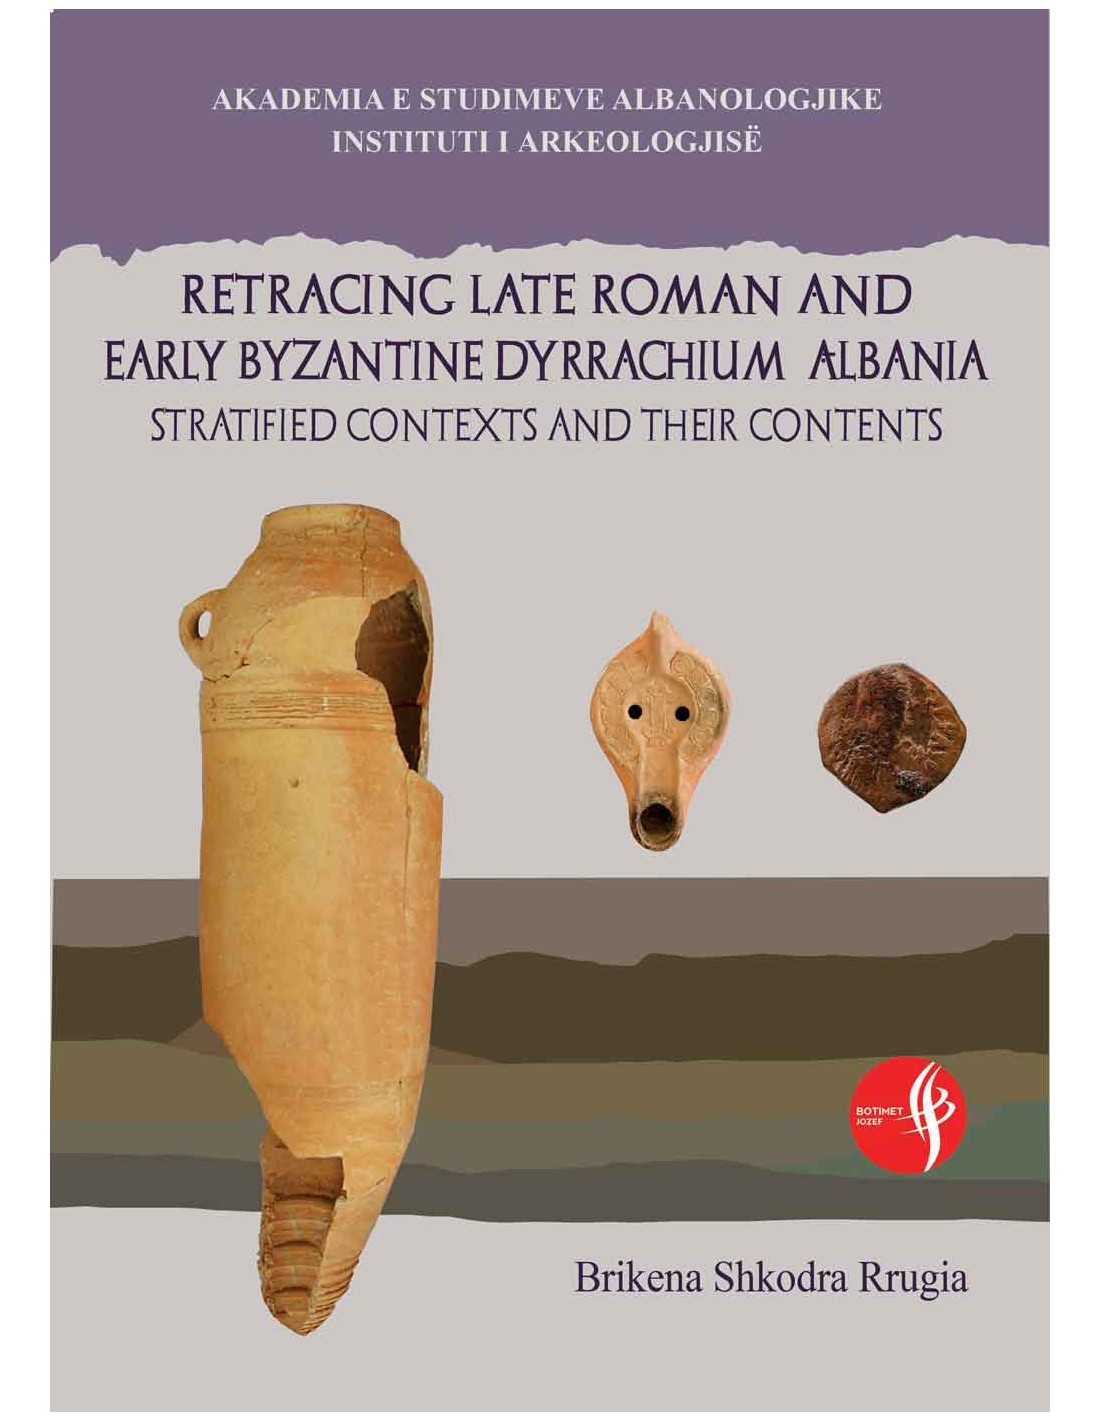 Shkodra-Rrugia, Brikena : Retracing Late Roman and Early Byzantine Dyrrachium (Albania)